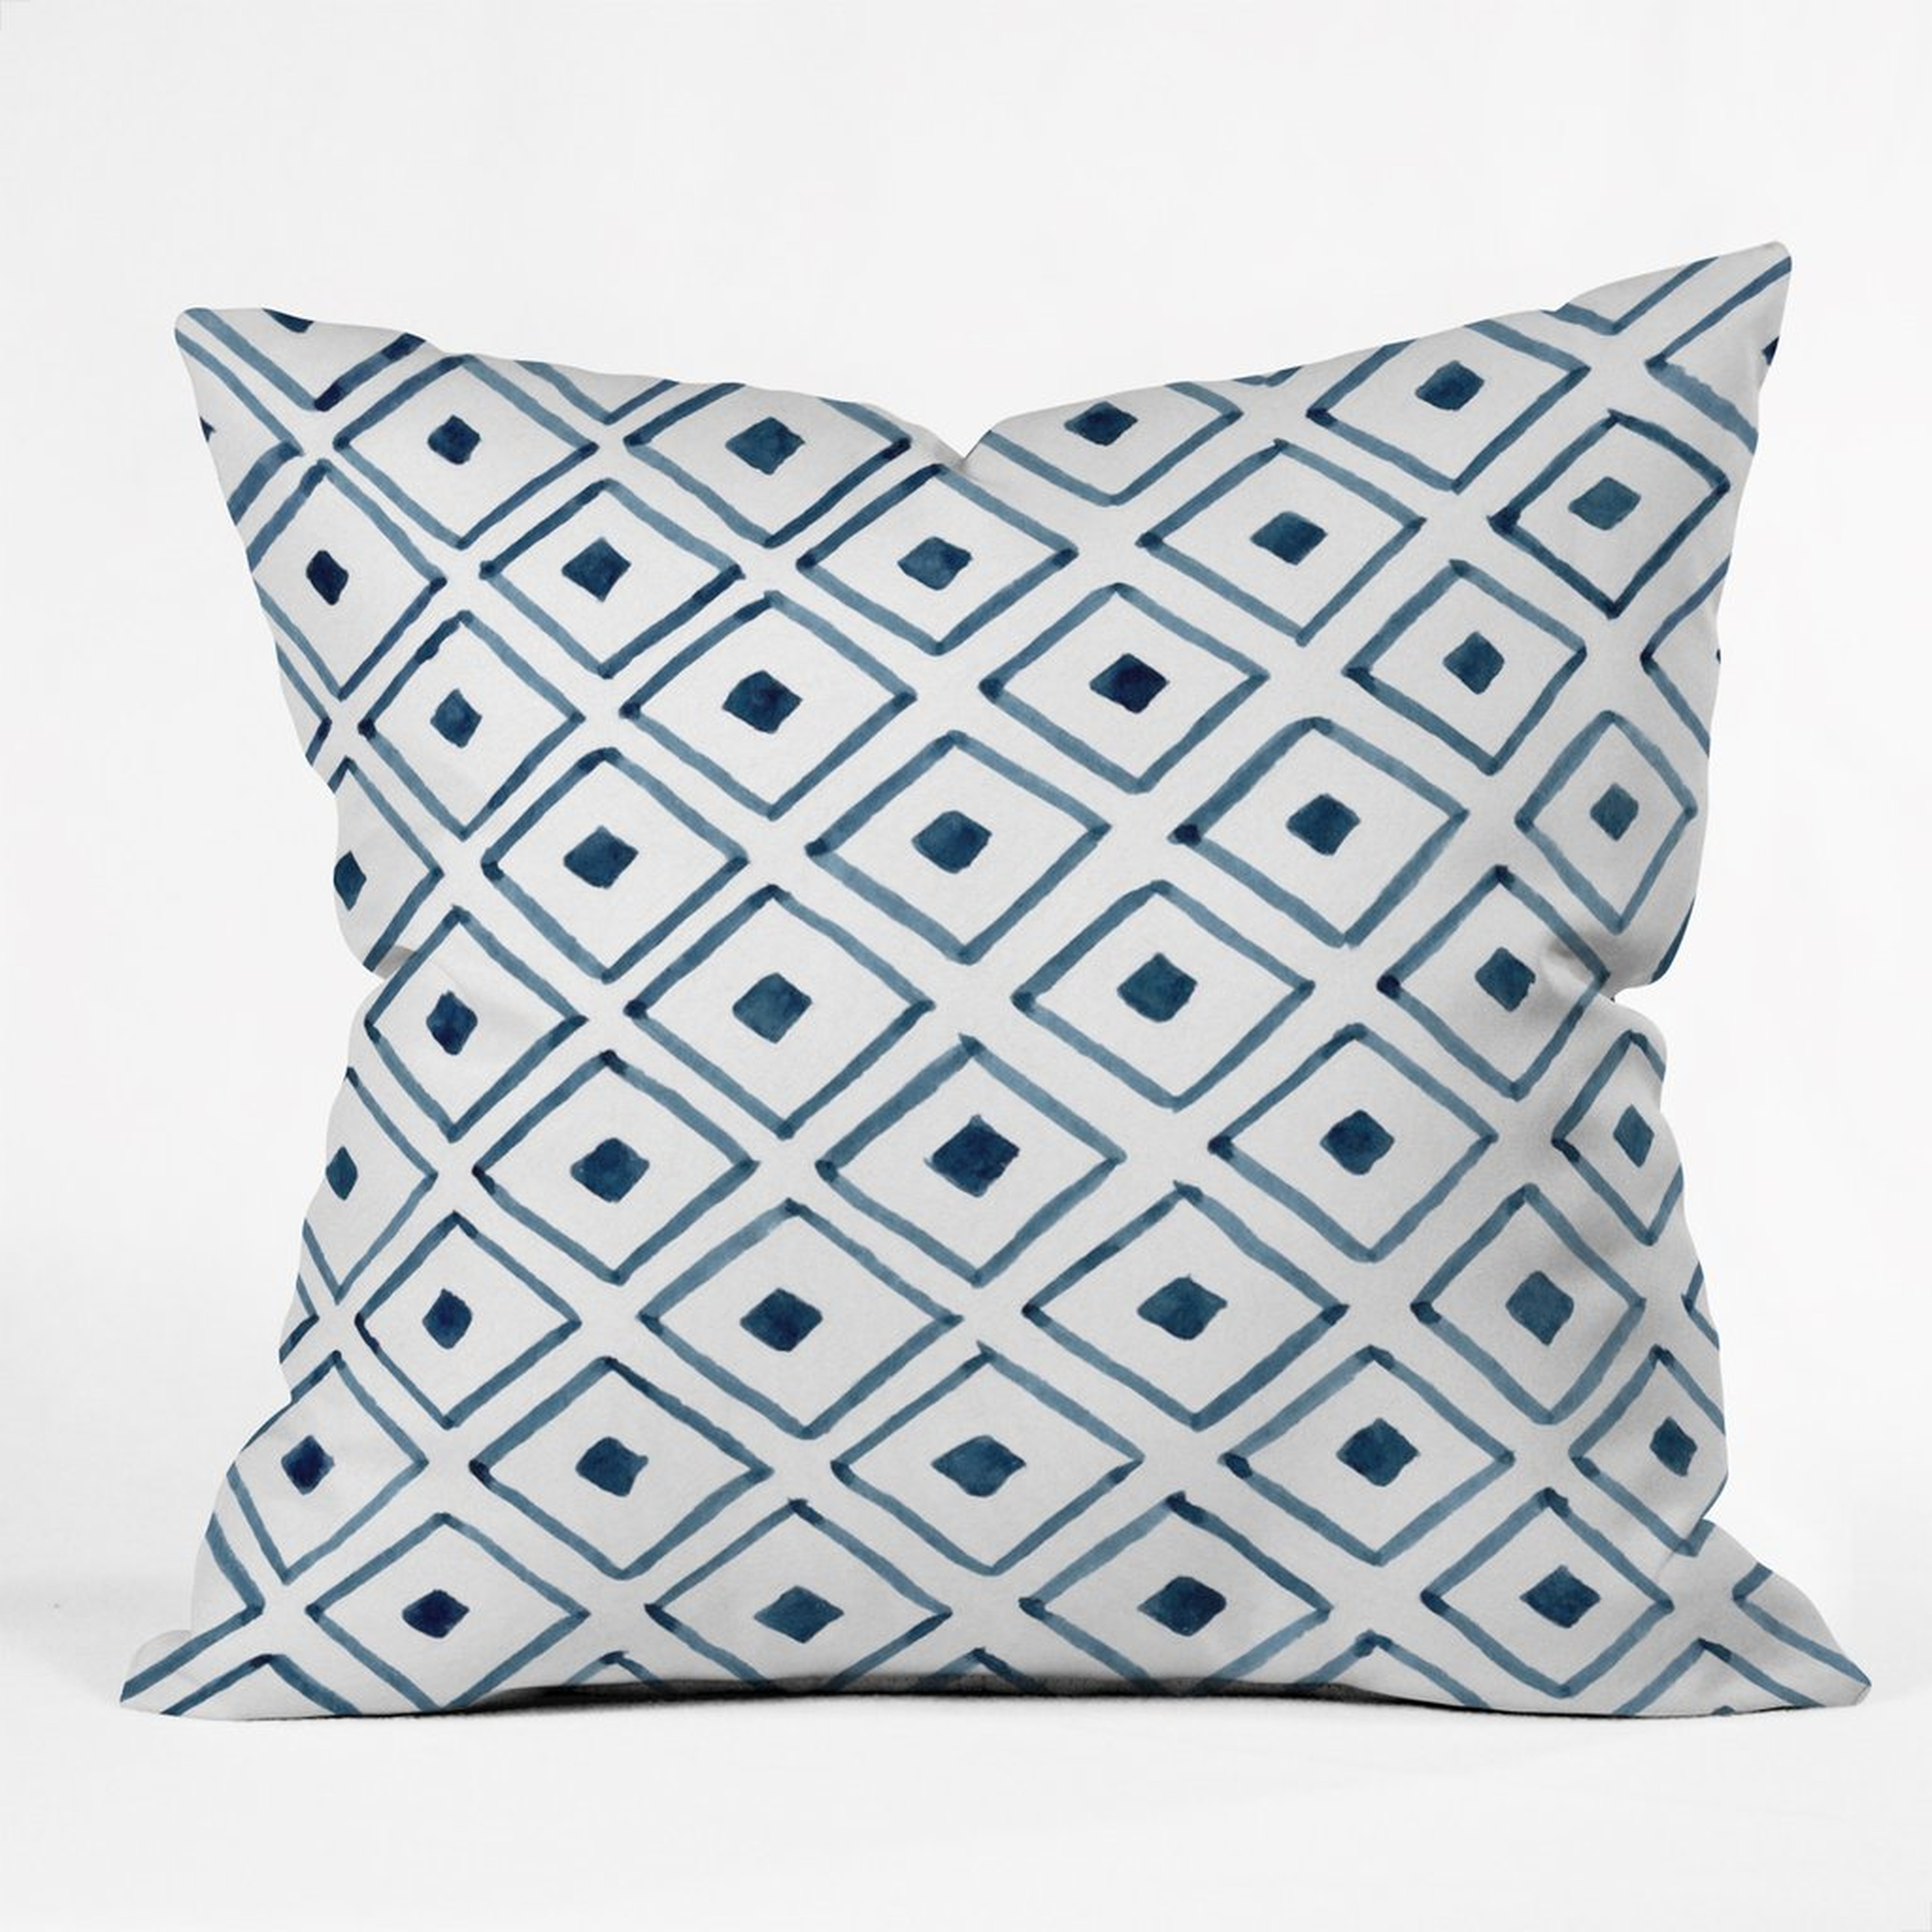 INDIGO ASCOT Throw Pillow - 20" x 20" - Pillow Cover With Insert - Deny Designs